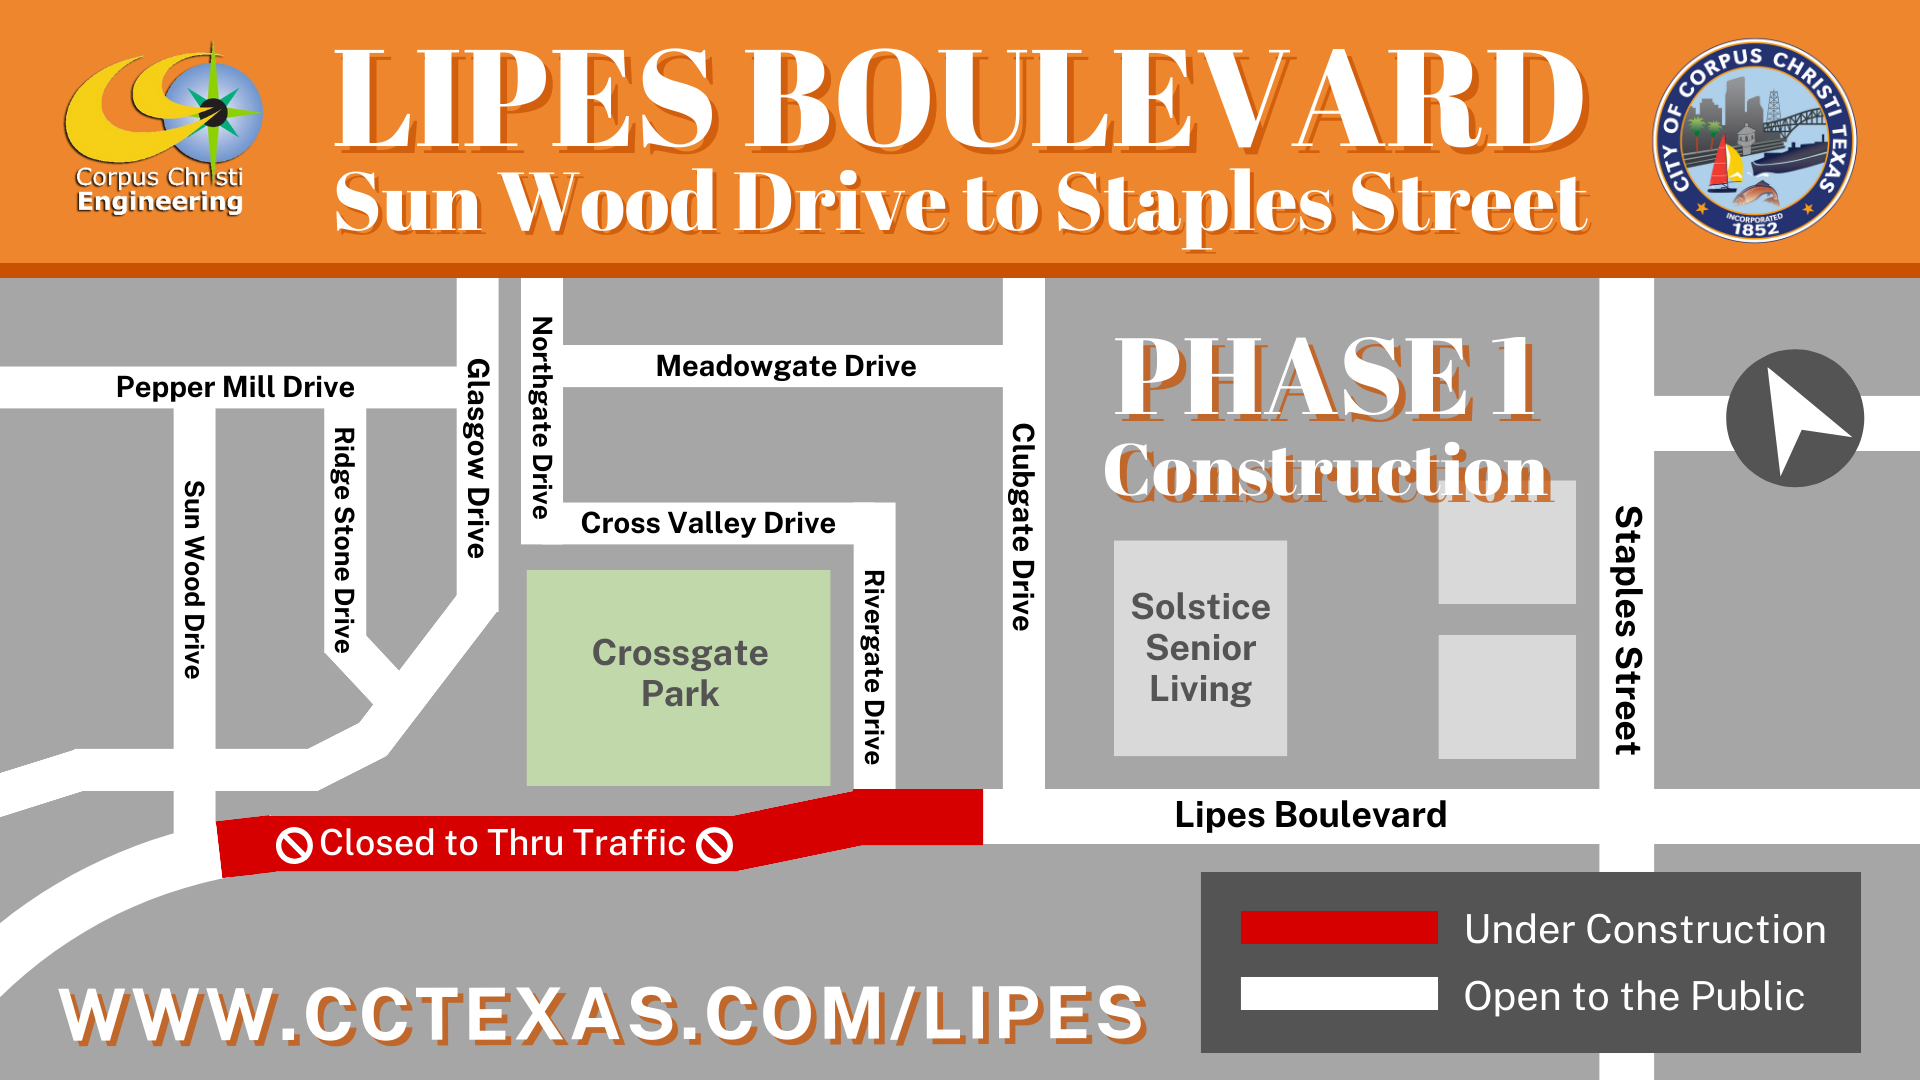 Lipes Boulevard: Sun Wood Drive to Staples Street.